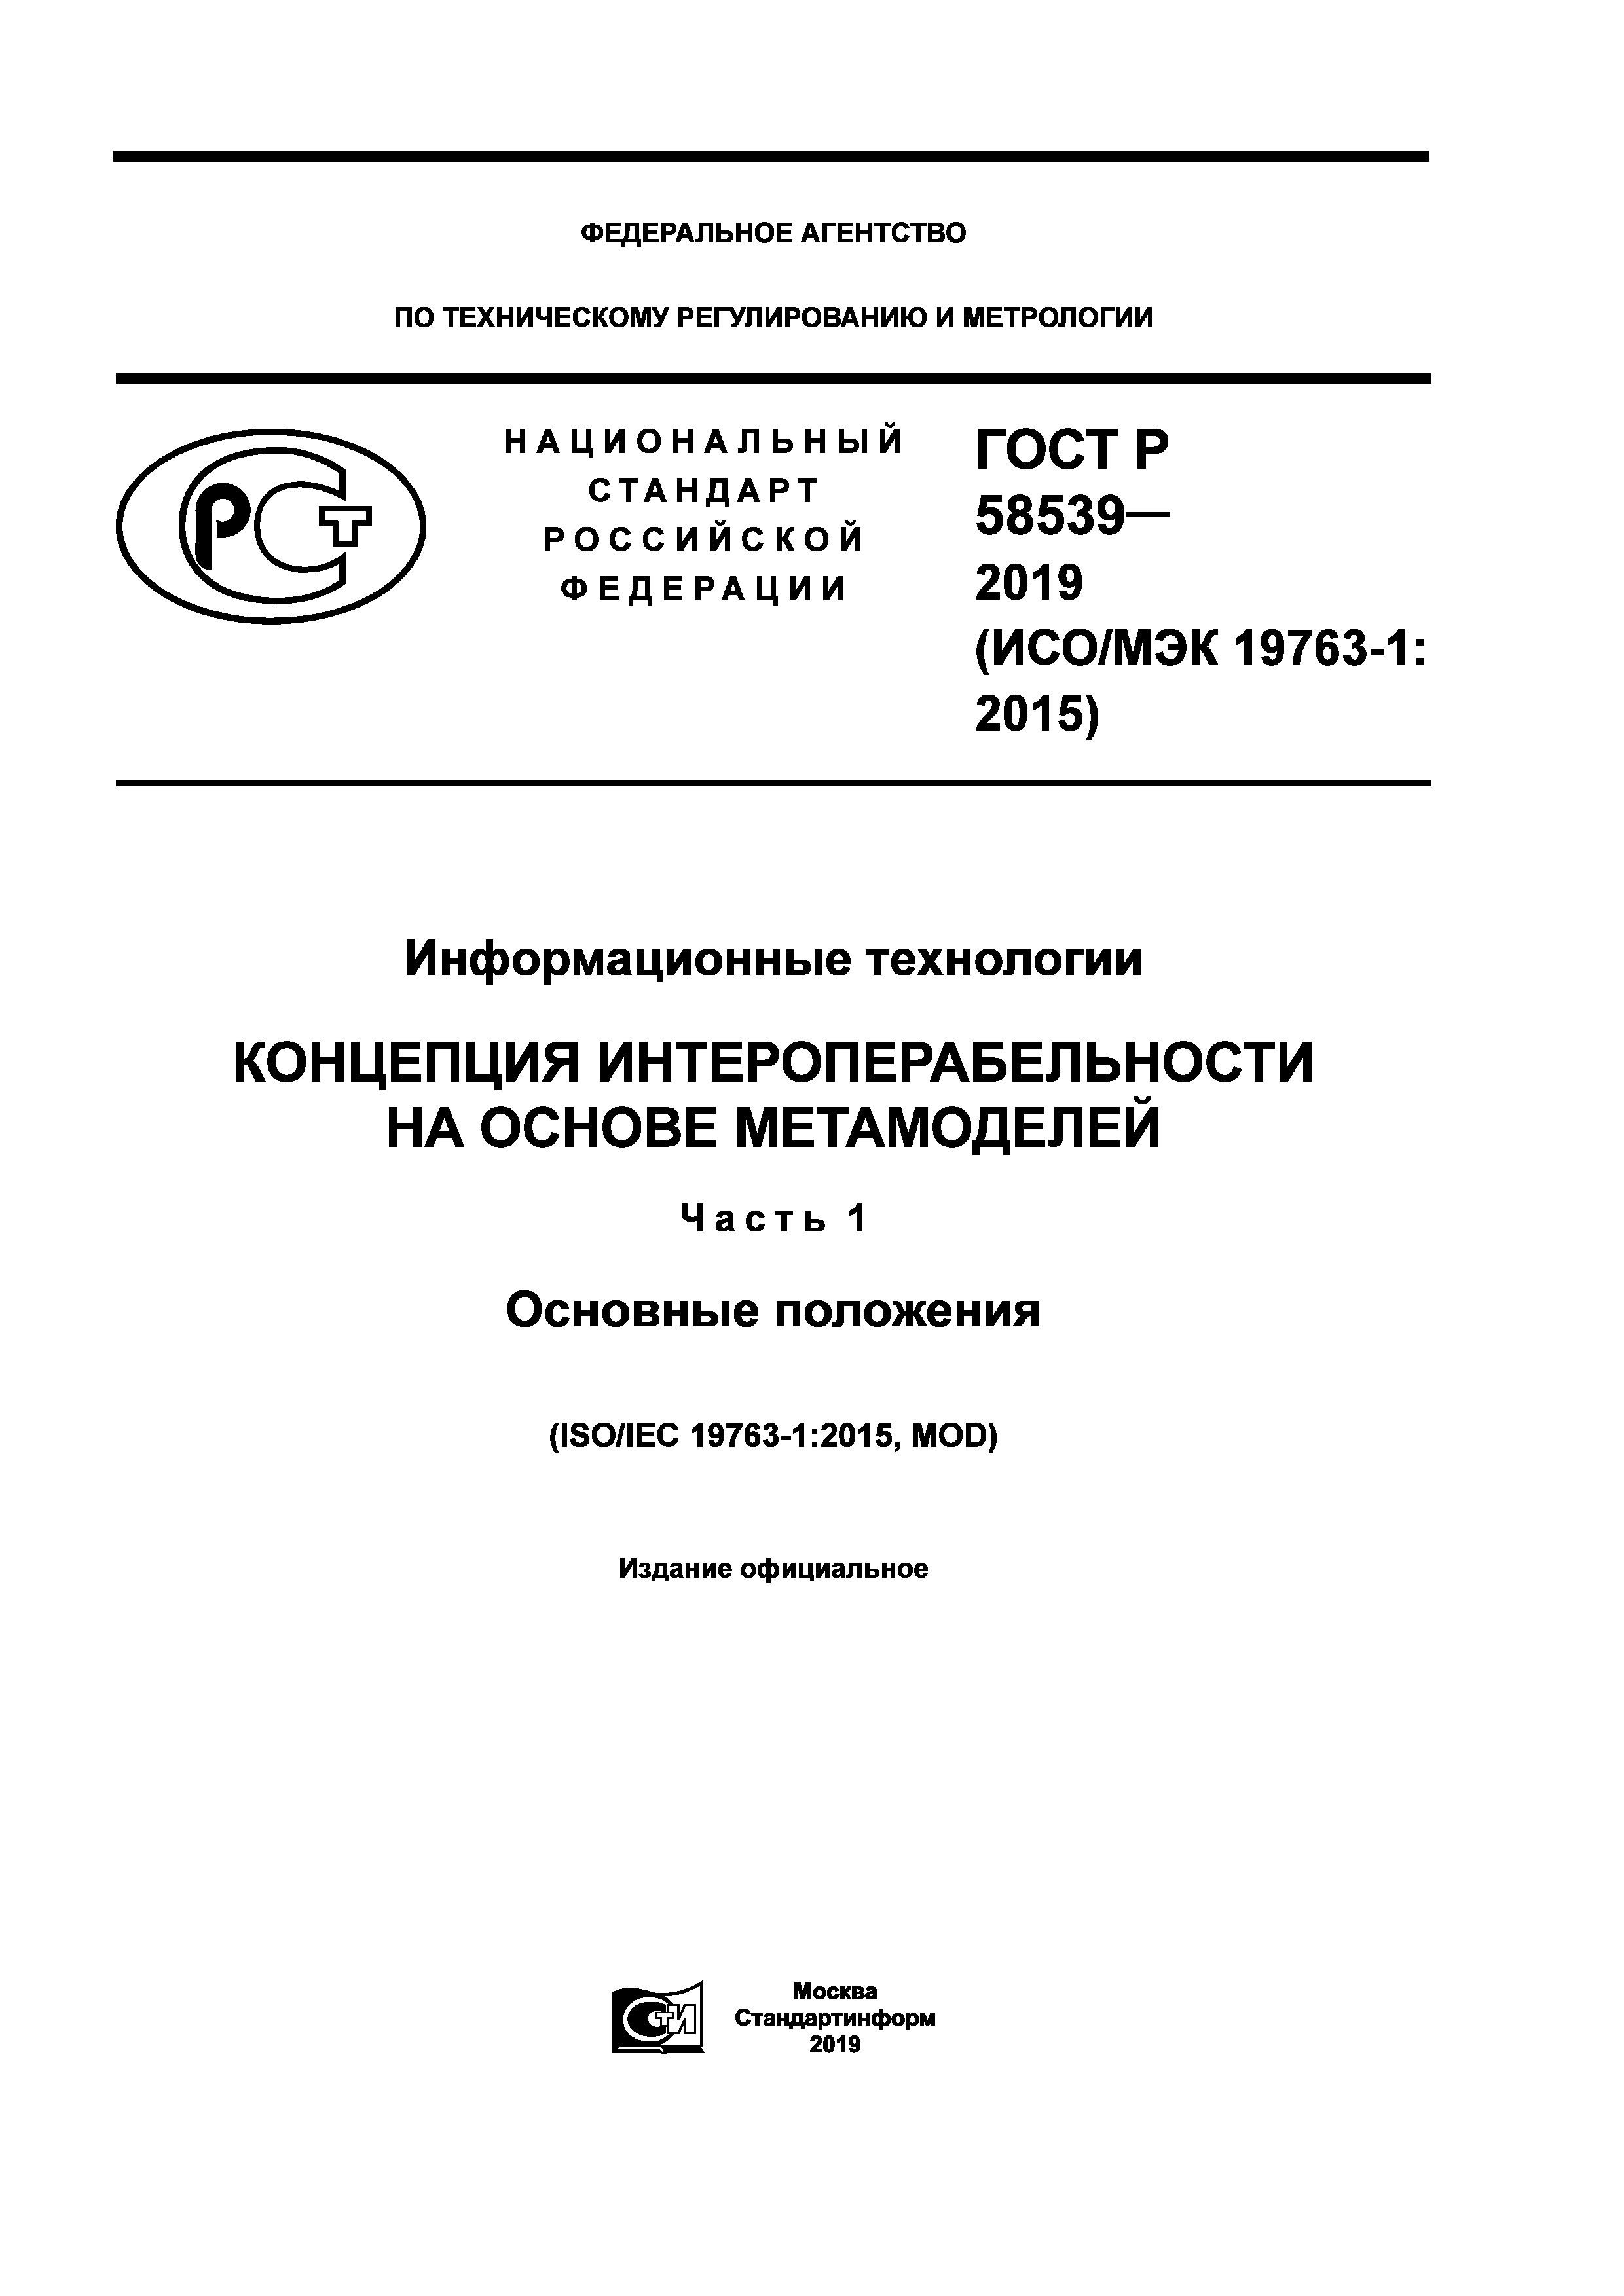 ГОСТ Р 58539-2019